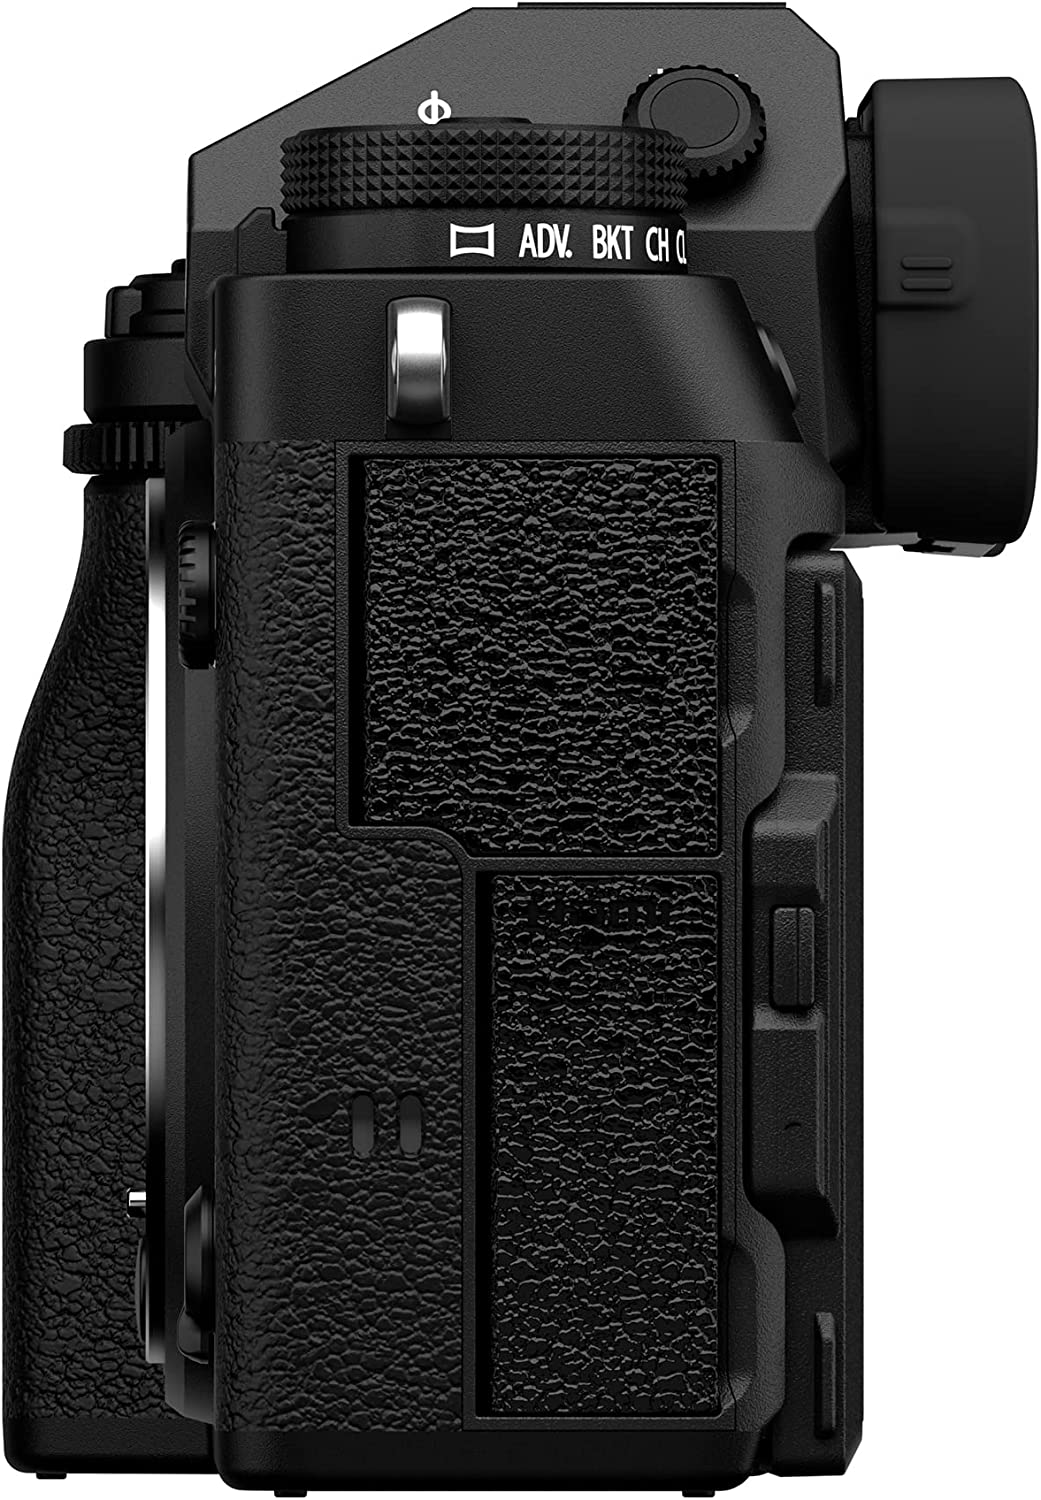 Fujifilm X-T5 Mirrorless Digital Camera with 16-80mm Lens